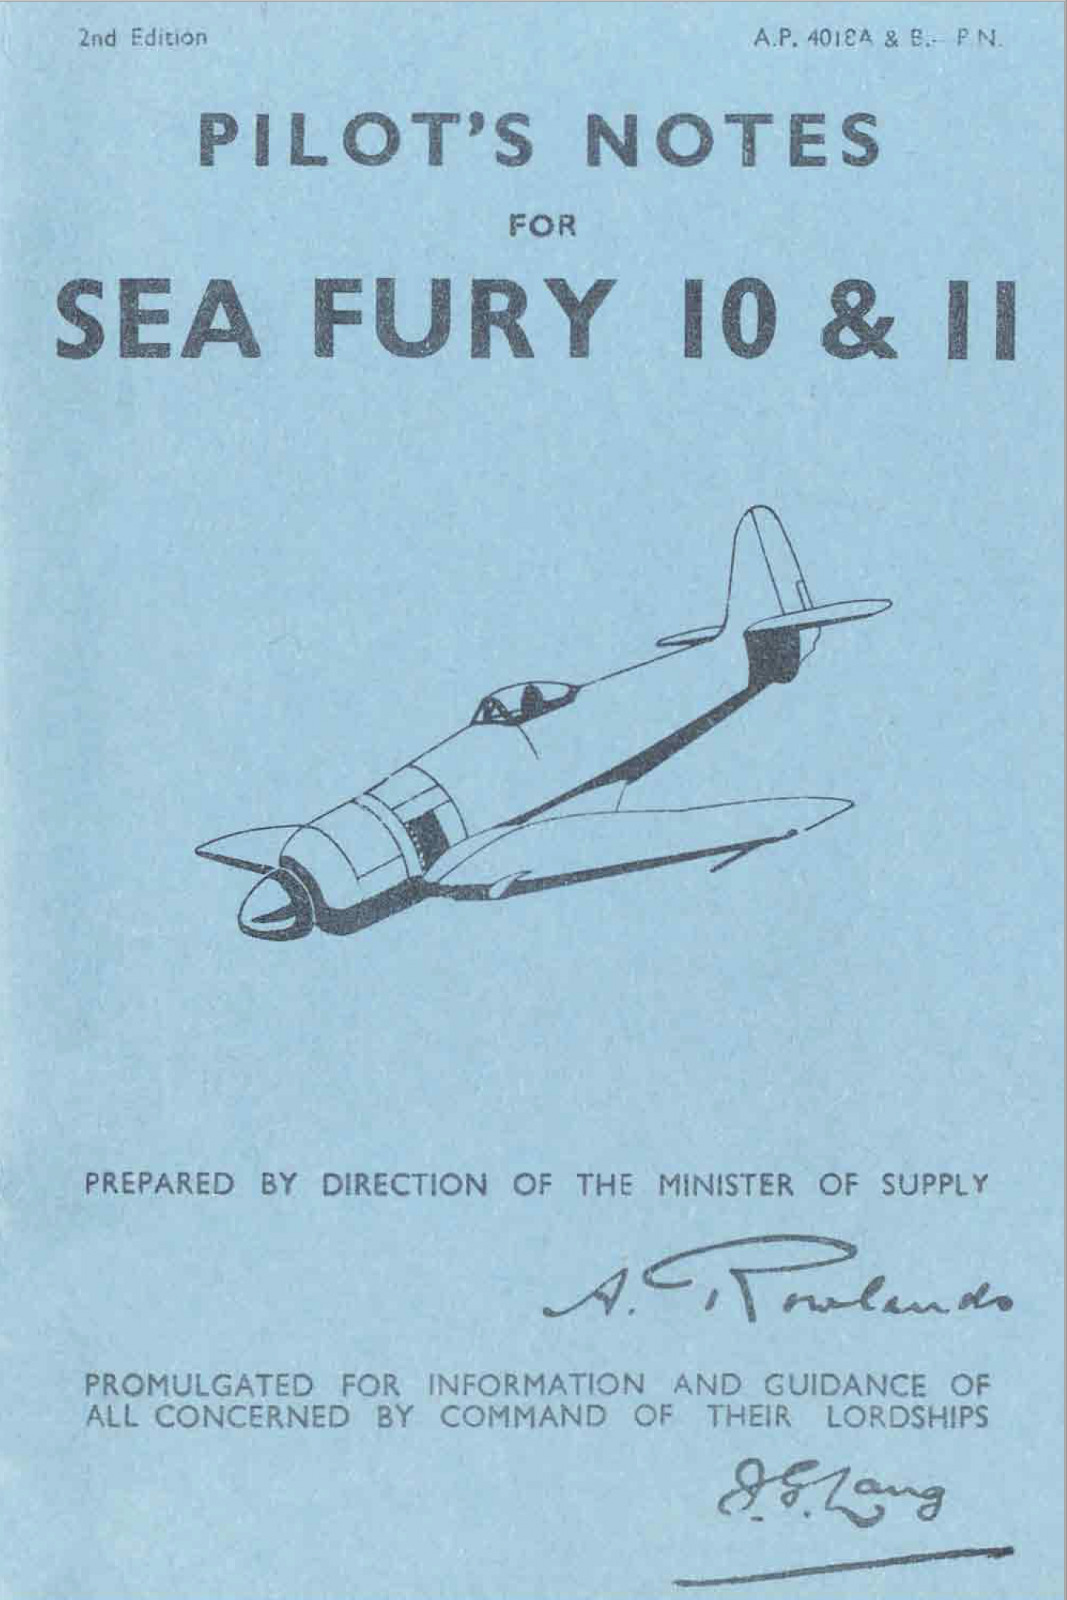 69 Page 1950 HAWKER SEA FURY 10 & 11 Pilot's Notes A.P. 4018A Flight Manual CD